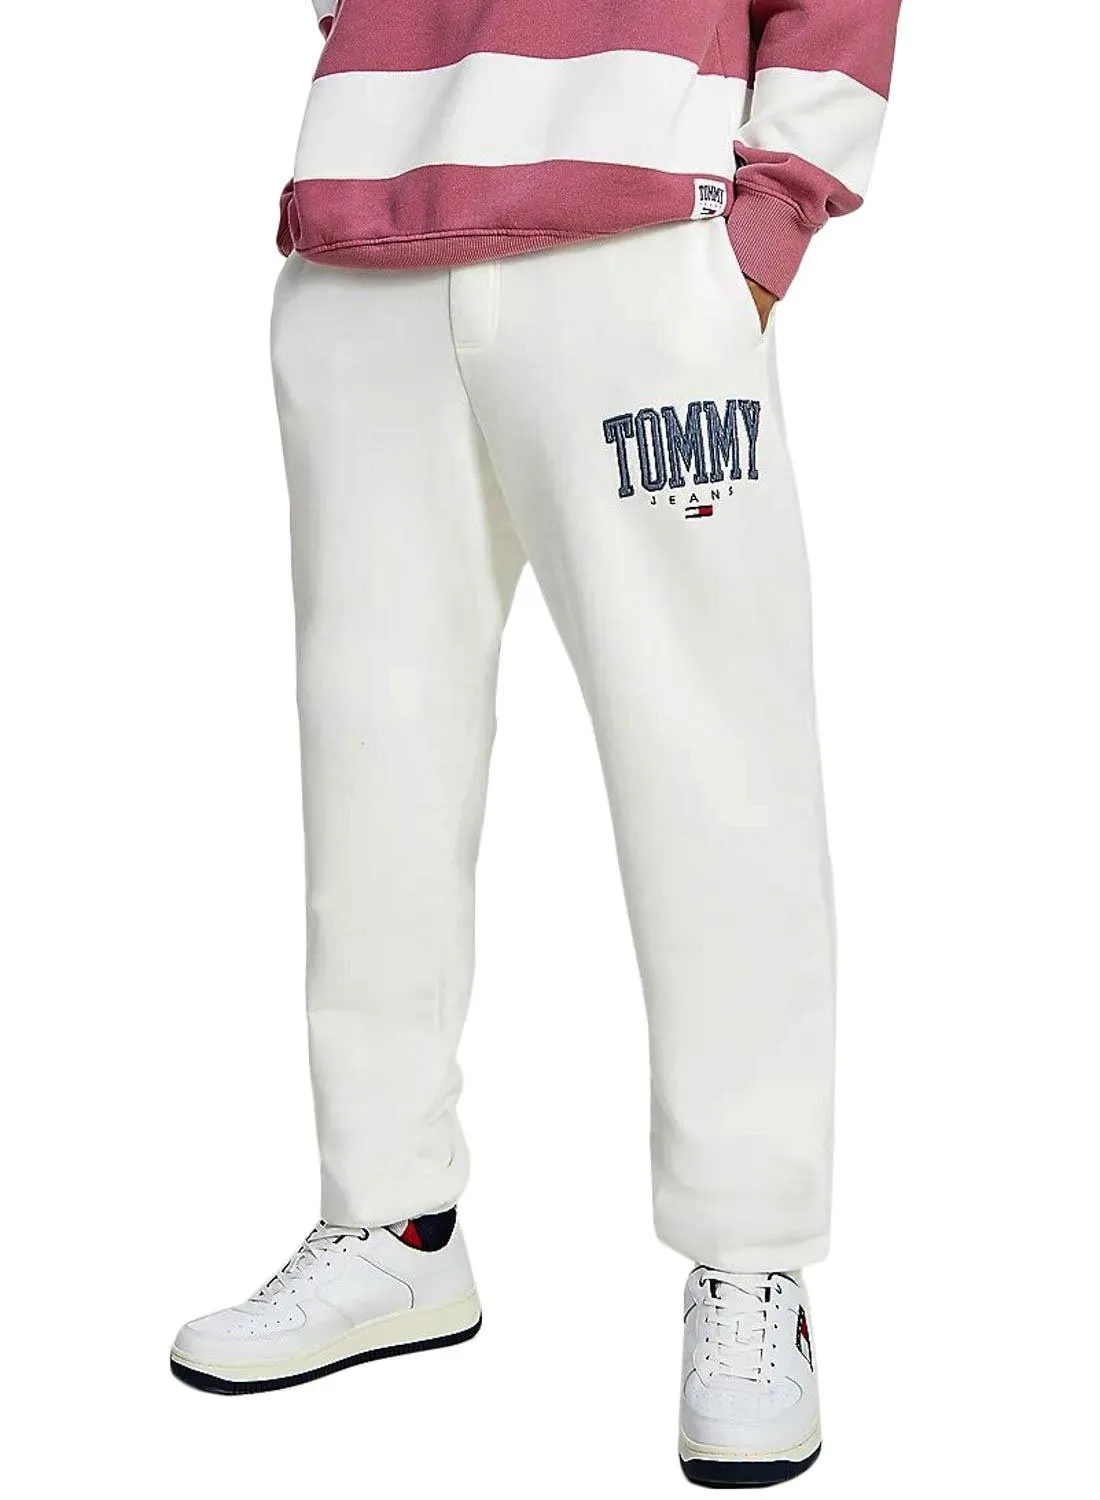 Pantalon Tommy Jeans Blanco | Miravia